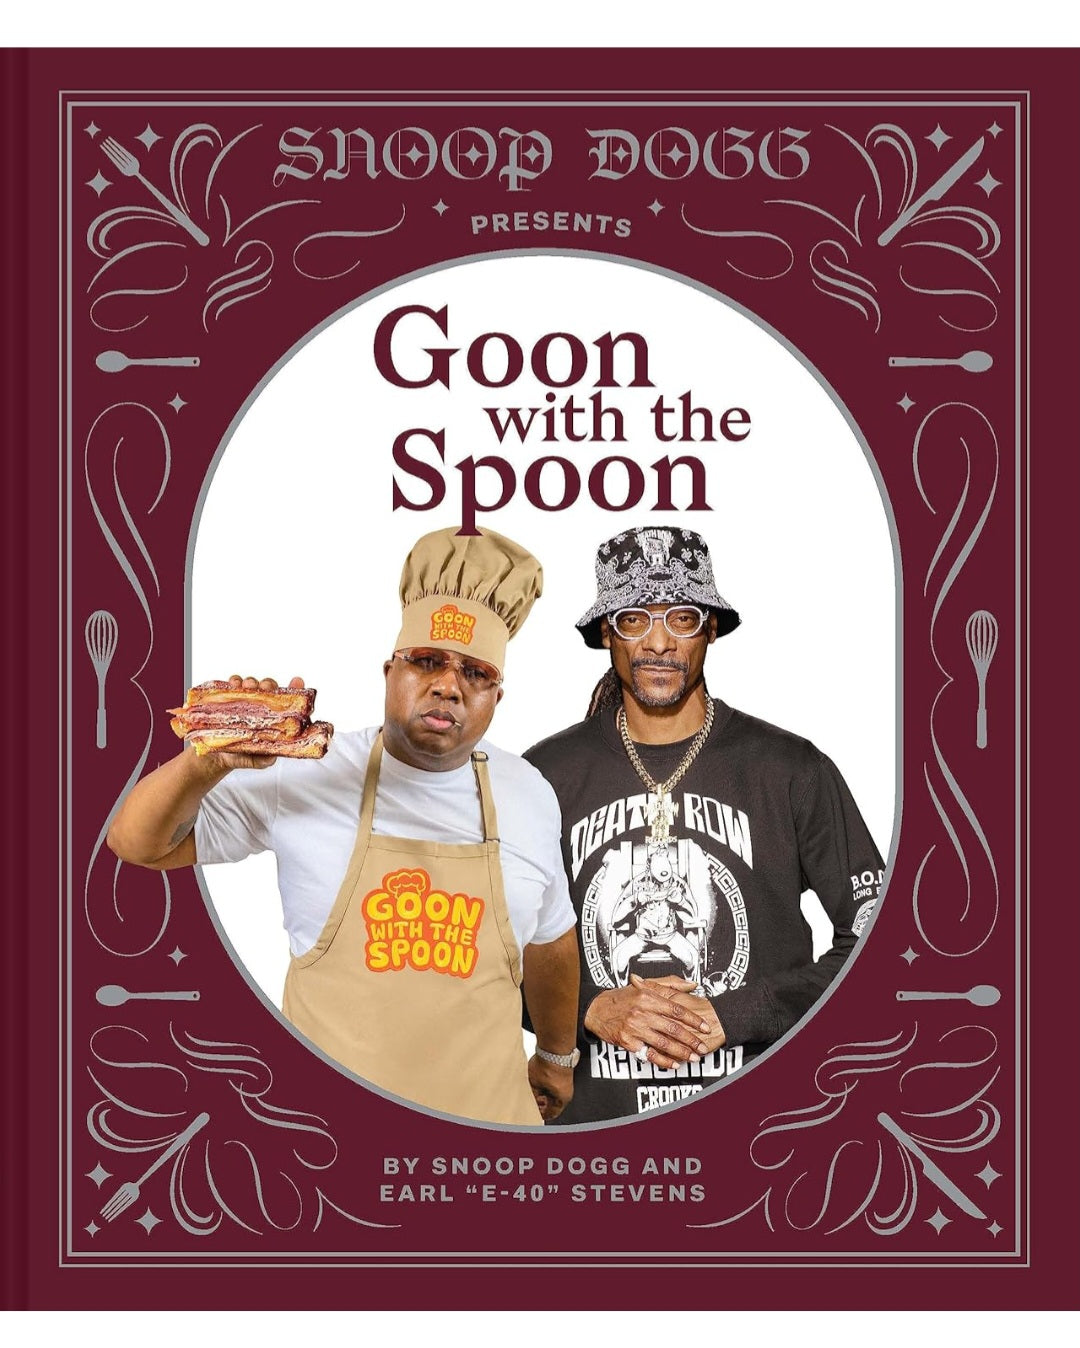 Goon with a Soon Cookbook